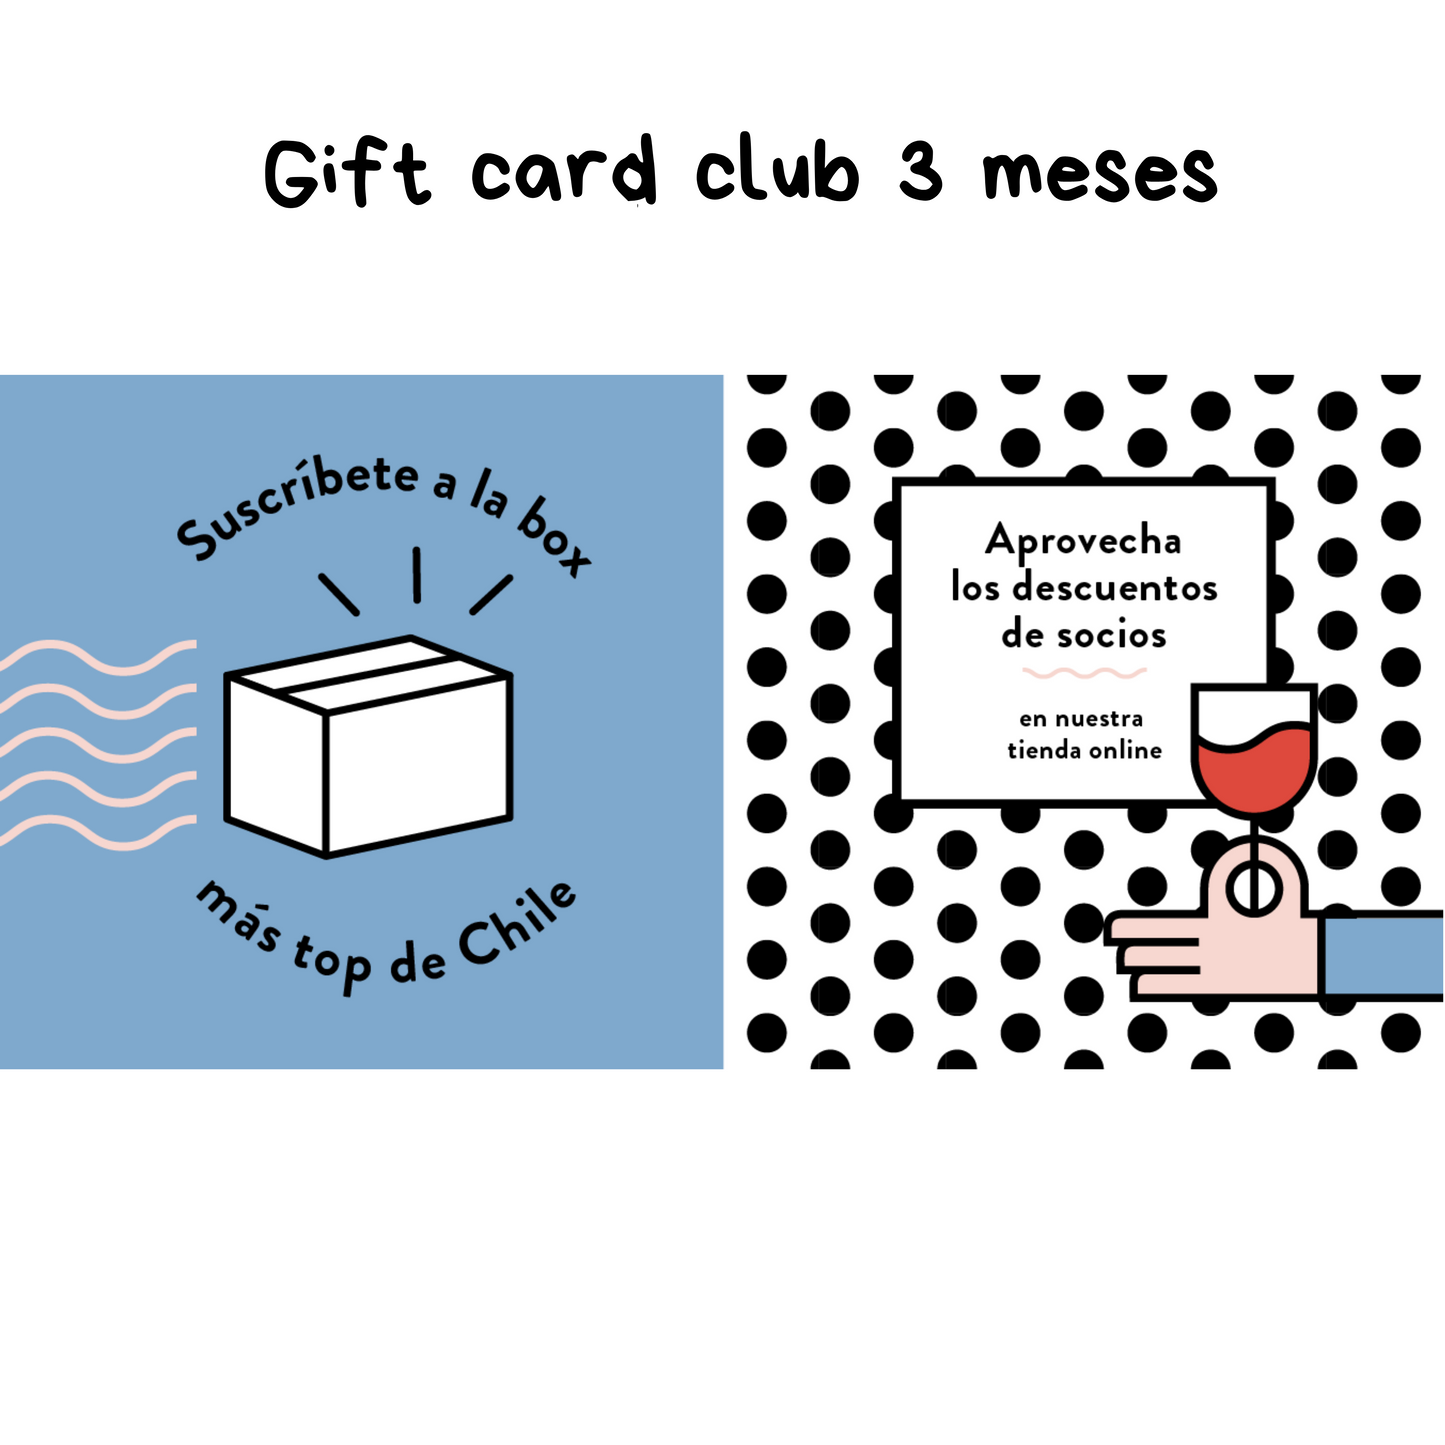 GIFT CARD 3 MESES